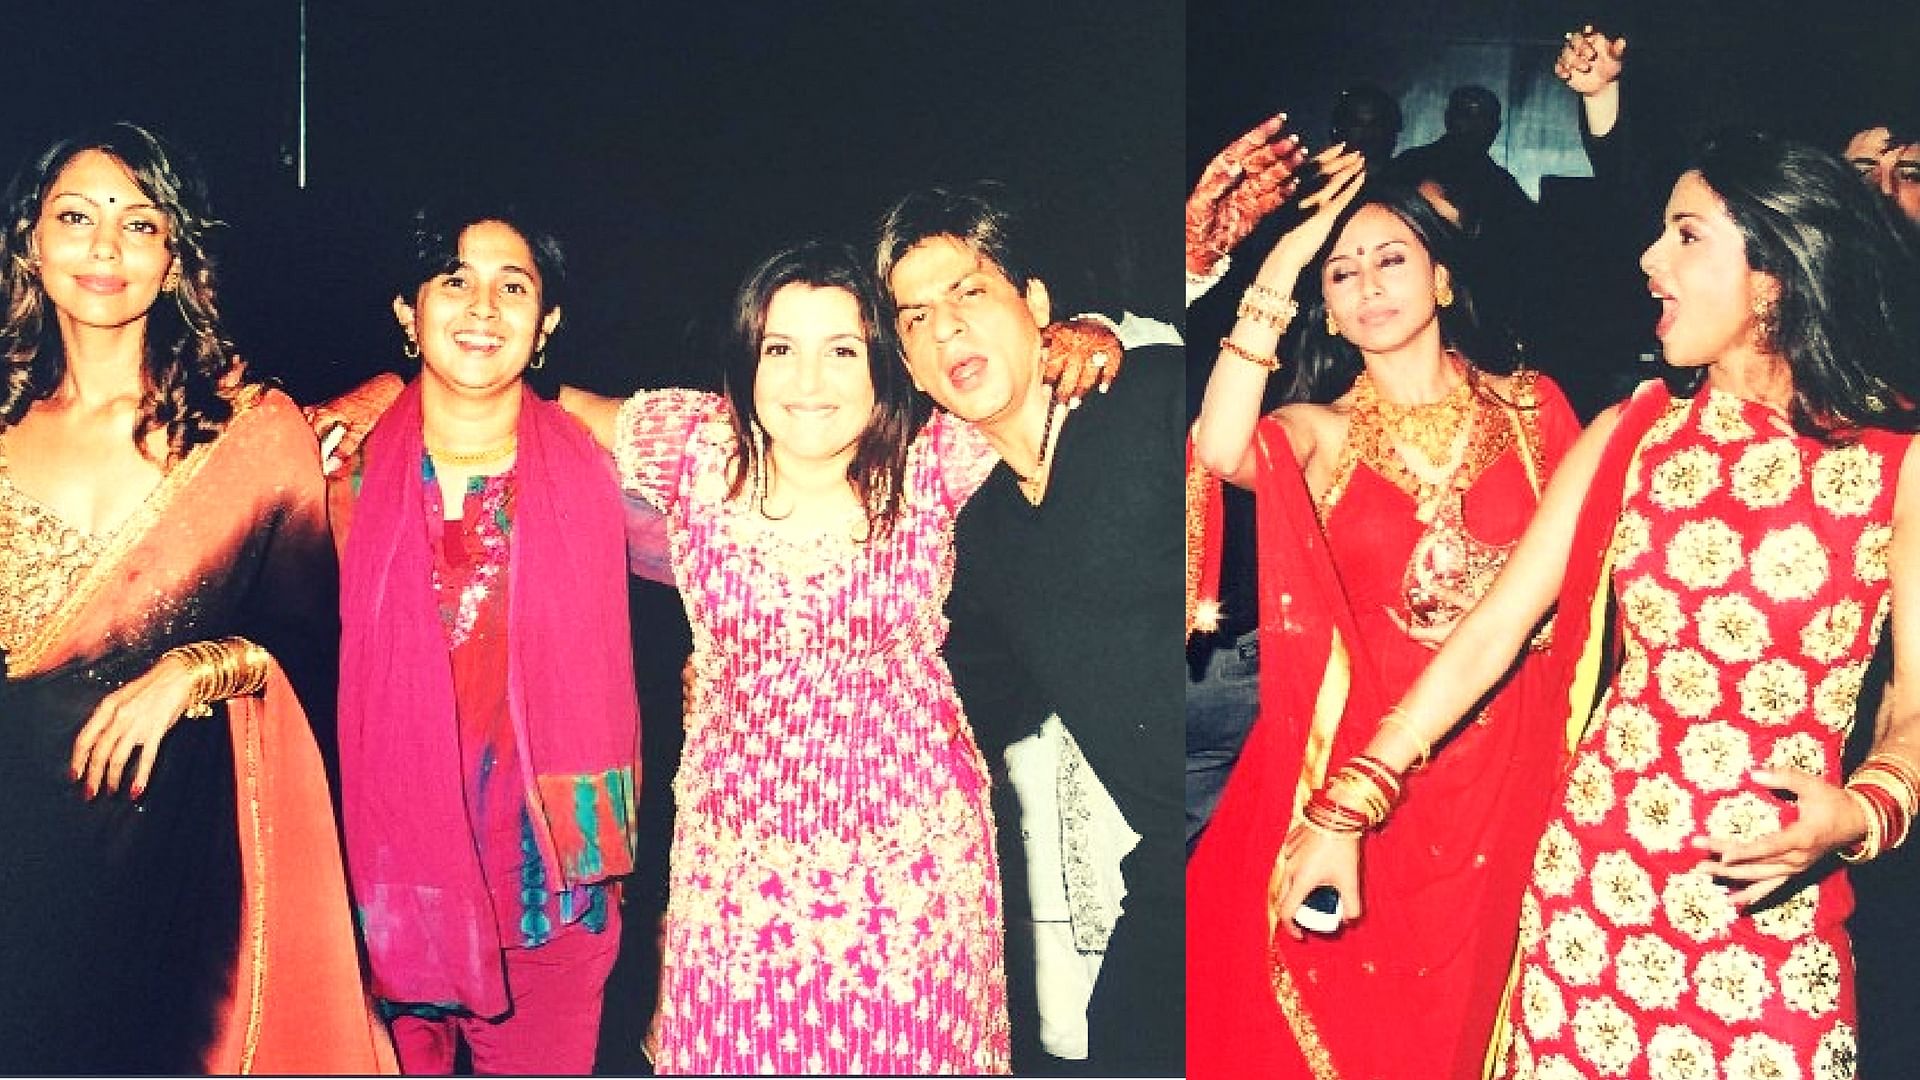 SRK, Gauri, Rani Mukerji and Priyanka Chopra at Farah Khan’s Sangeet ceremony. (Photo courtesy: <a href="https://www.instagram.com/farahkhankunder/?hl=en">Instagram/ farahkhankunder</a>)